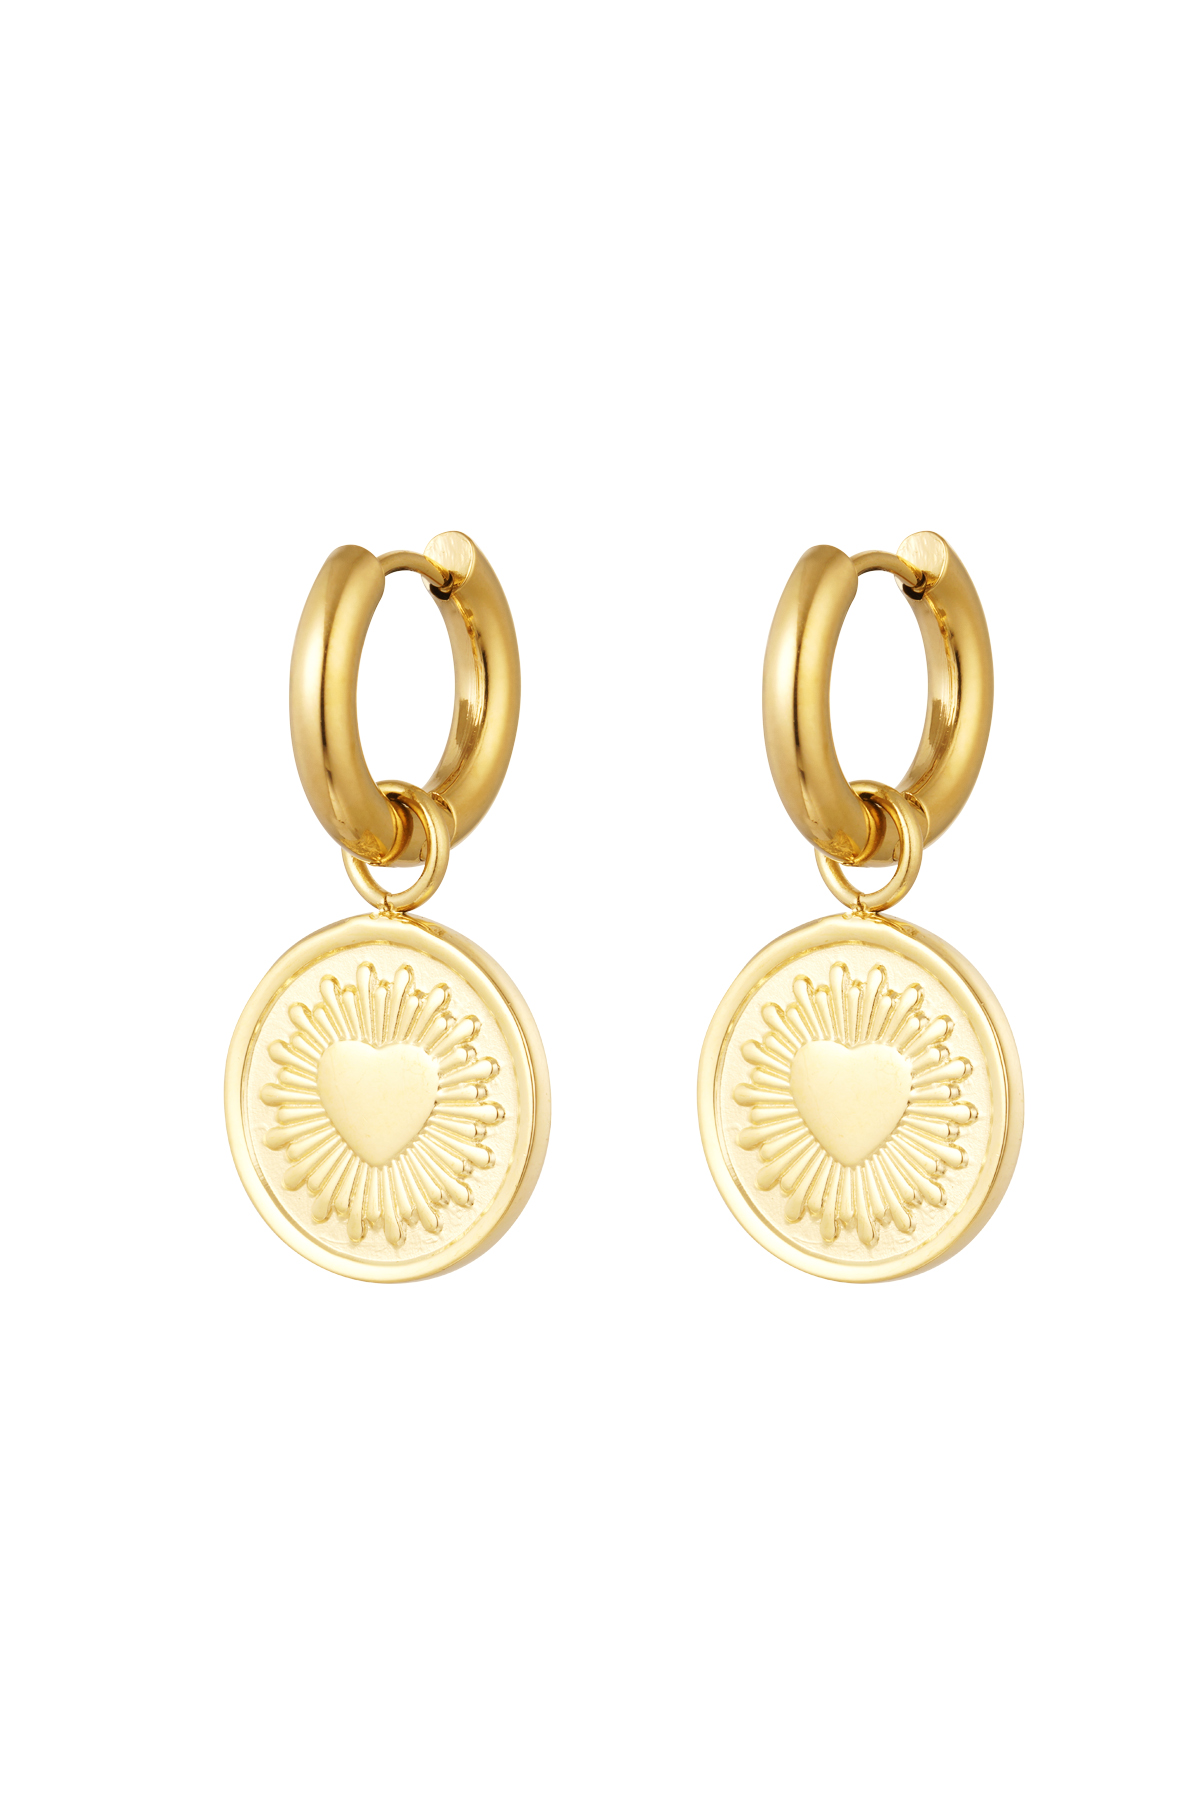 Earrings heart coin - gold Stainless Steel